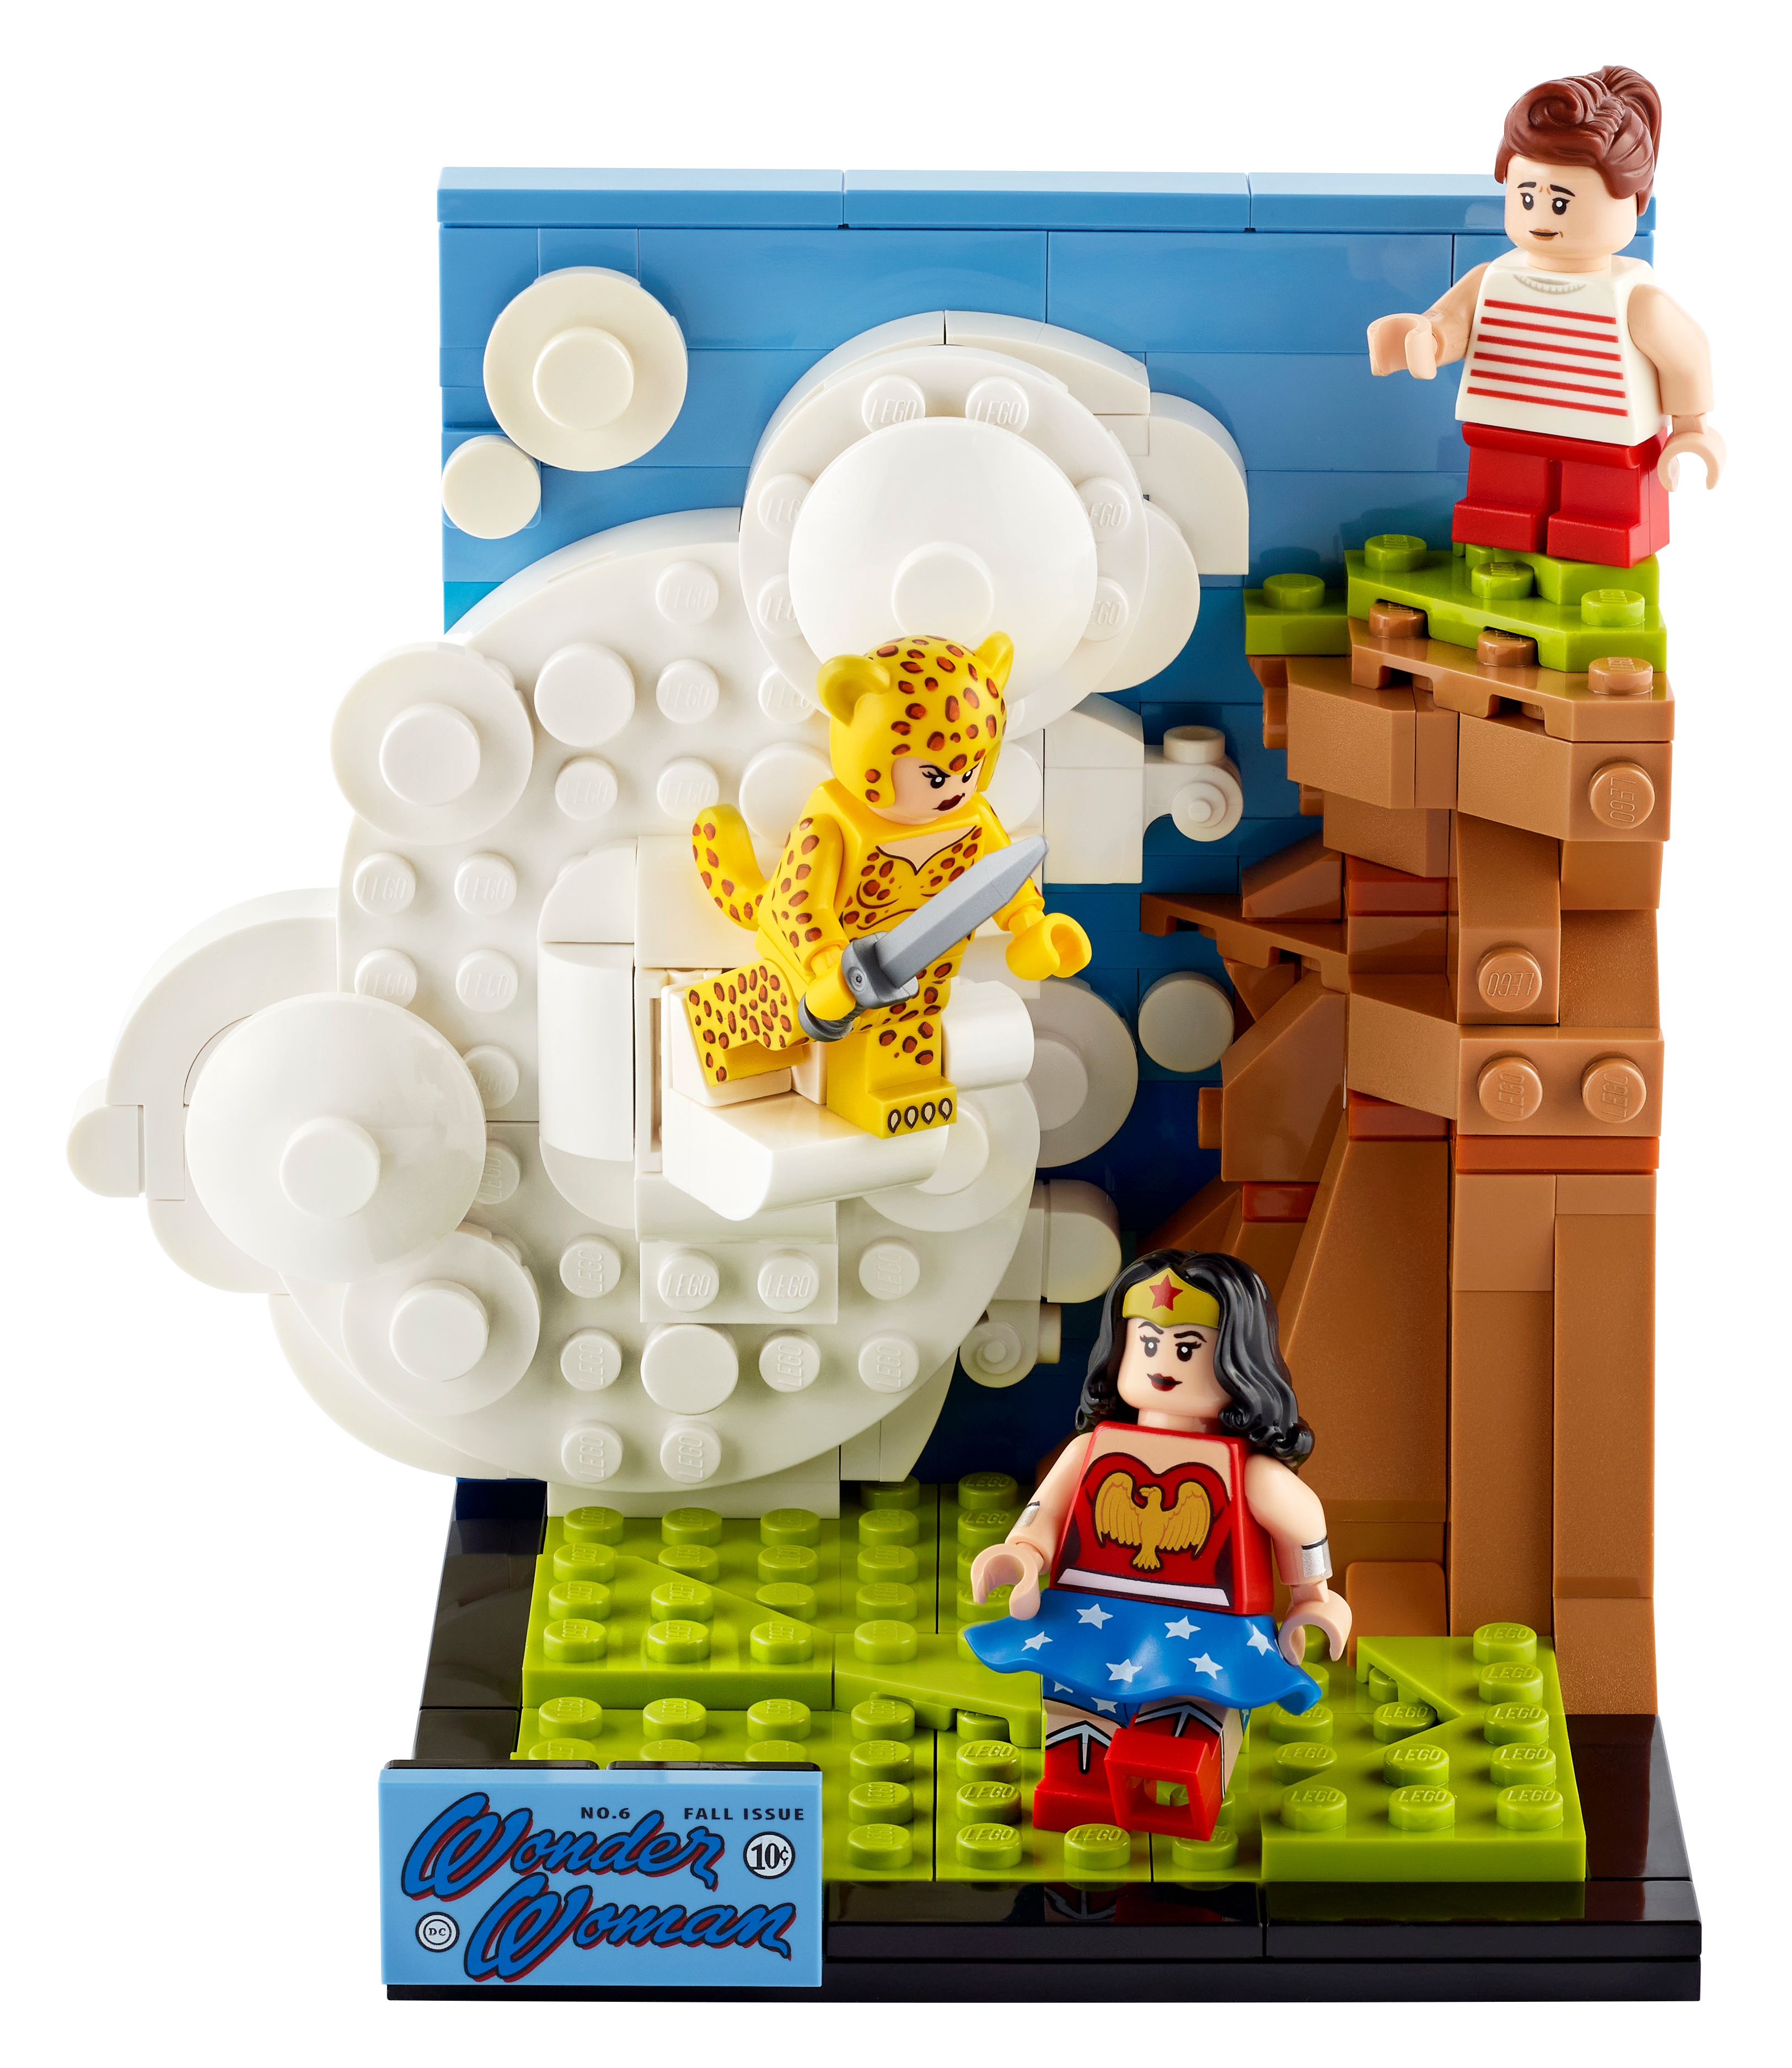 8pcs Wonder Woman series cheetah minifigure building blocks kids toy fit lego DE 